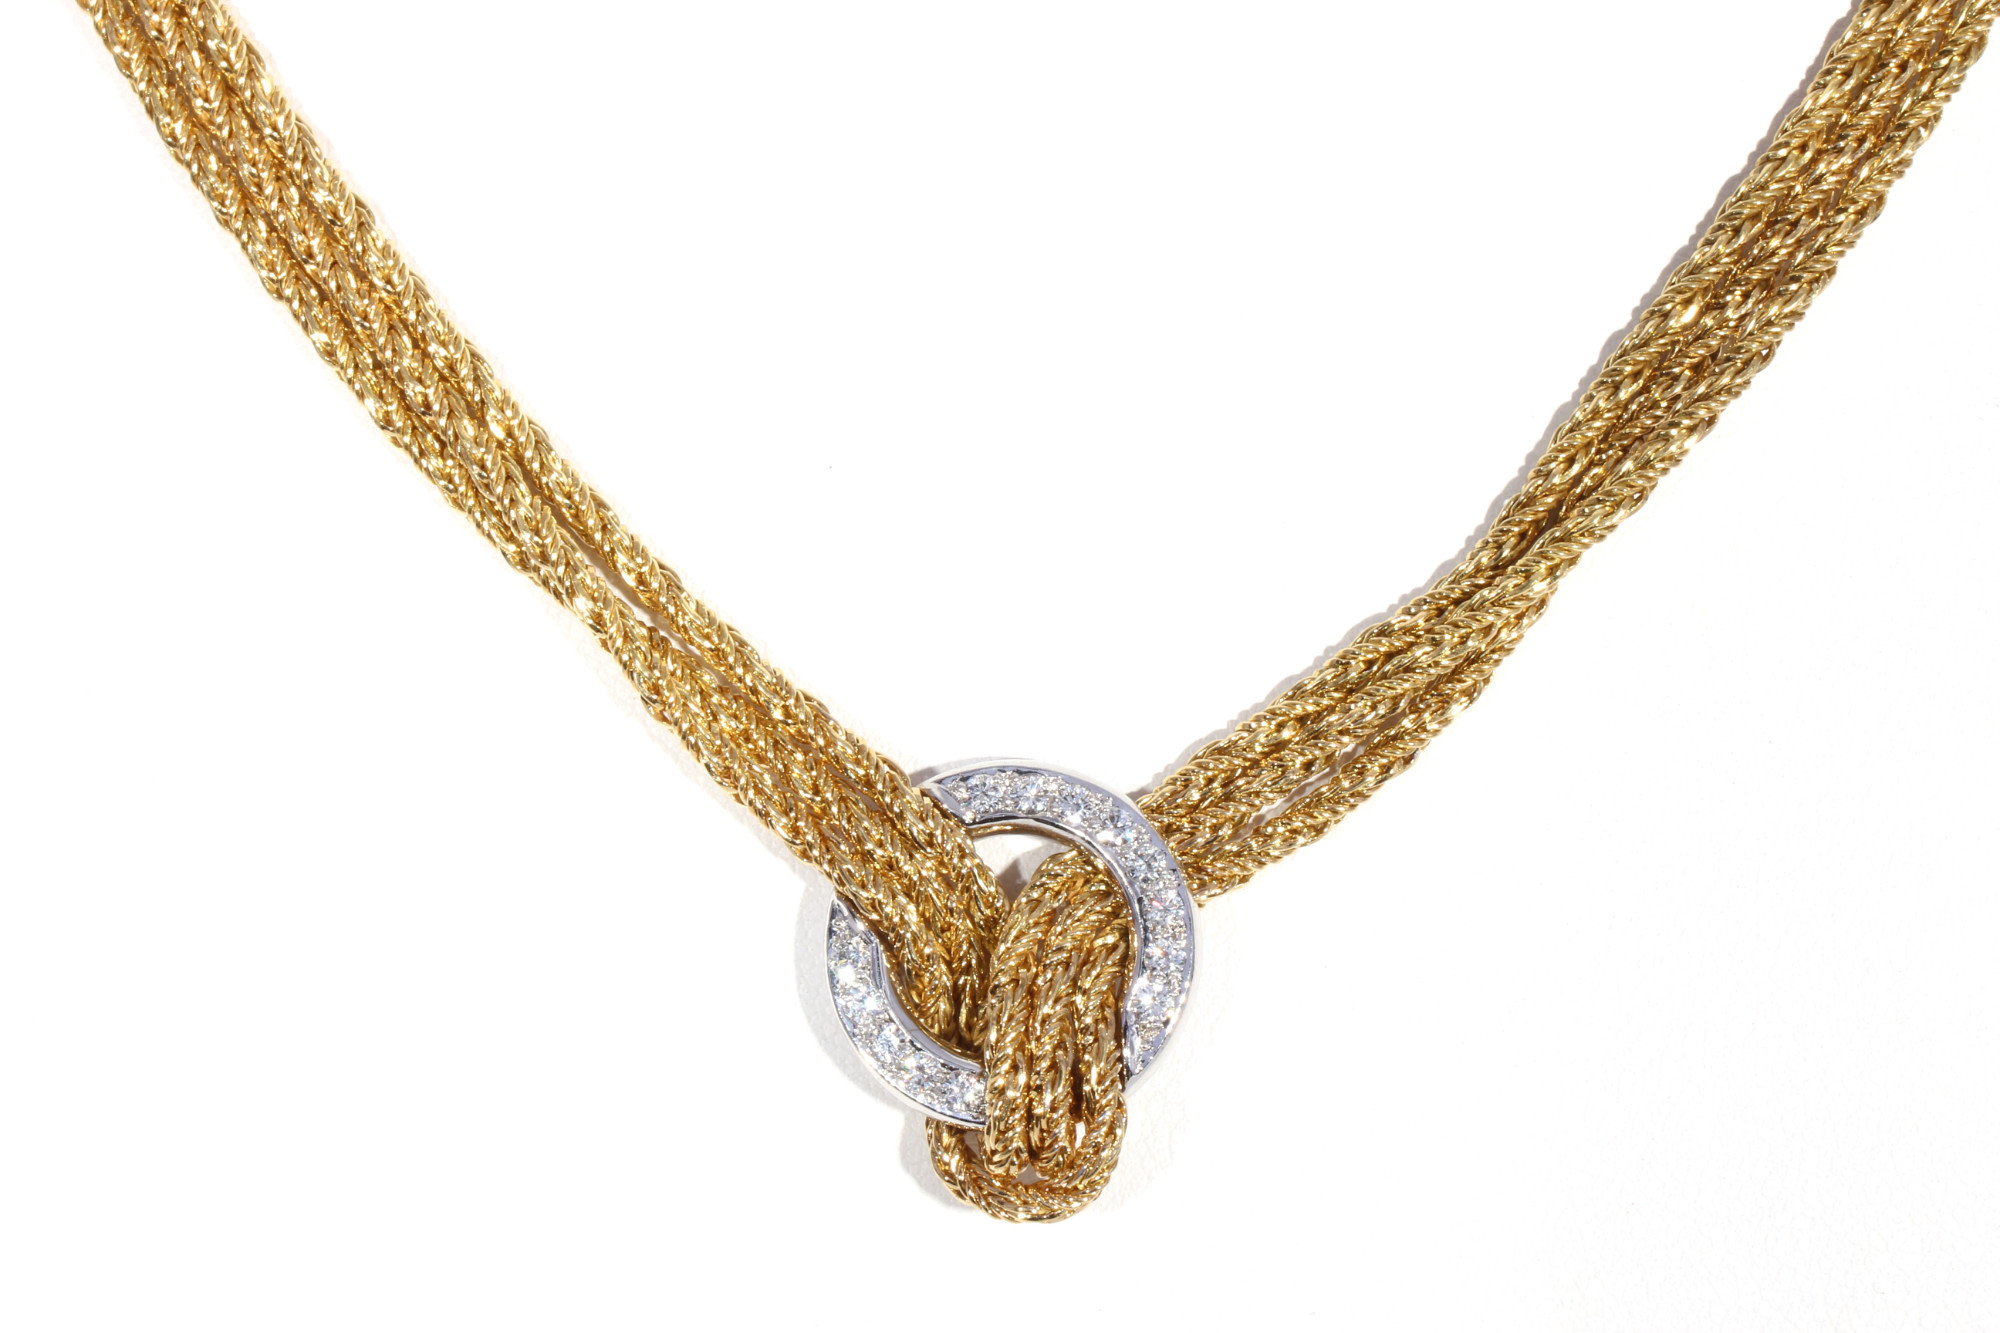 750 gold / 950 platinum diamond necklace and bracelet, cord, 18K Gold / 950 Platin Brillanten Coll - Image 3 of 5